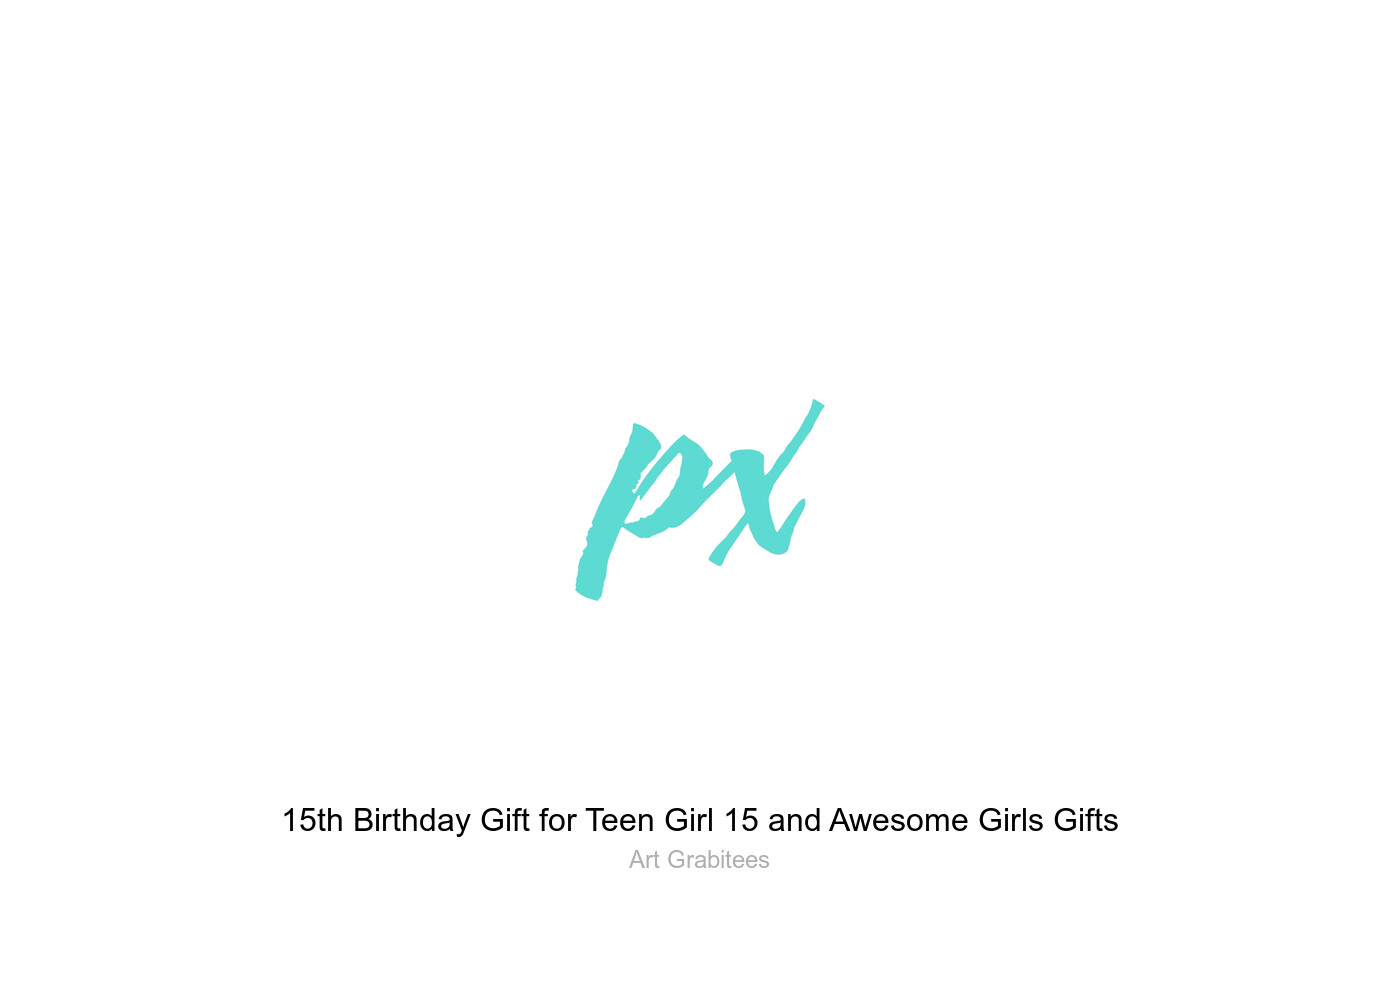 https://render.fineartamerica.com/images/rendered/backview/greeting-card/blank.jpg?artistName=Art+Grabitees&artworkName=15th+Birthday+Gift+for+Teen+Girl+15+and+Awesome+Girls+Gifts&orientation=0&memberIdType=artistid&memberId=754800&domainName=pixels.com